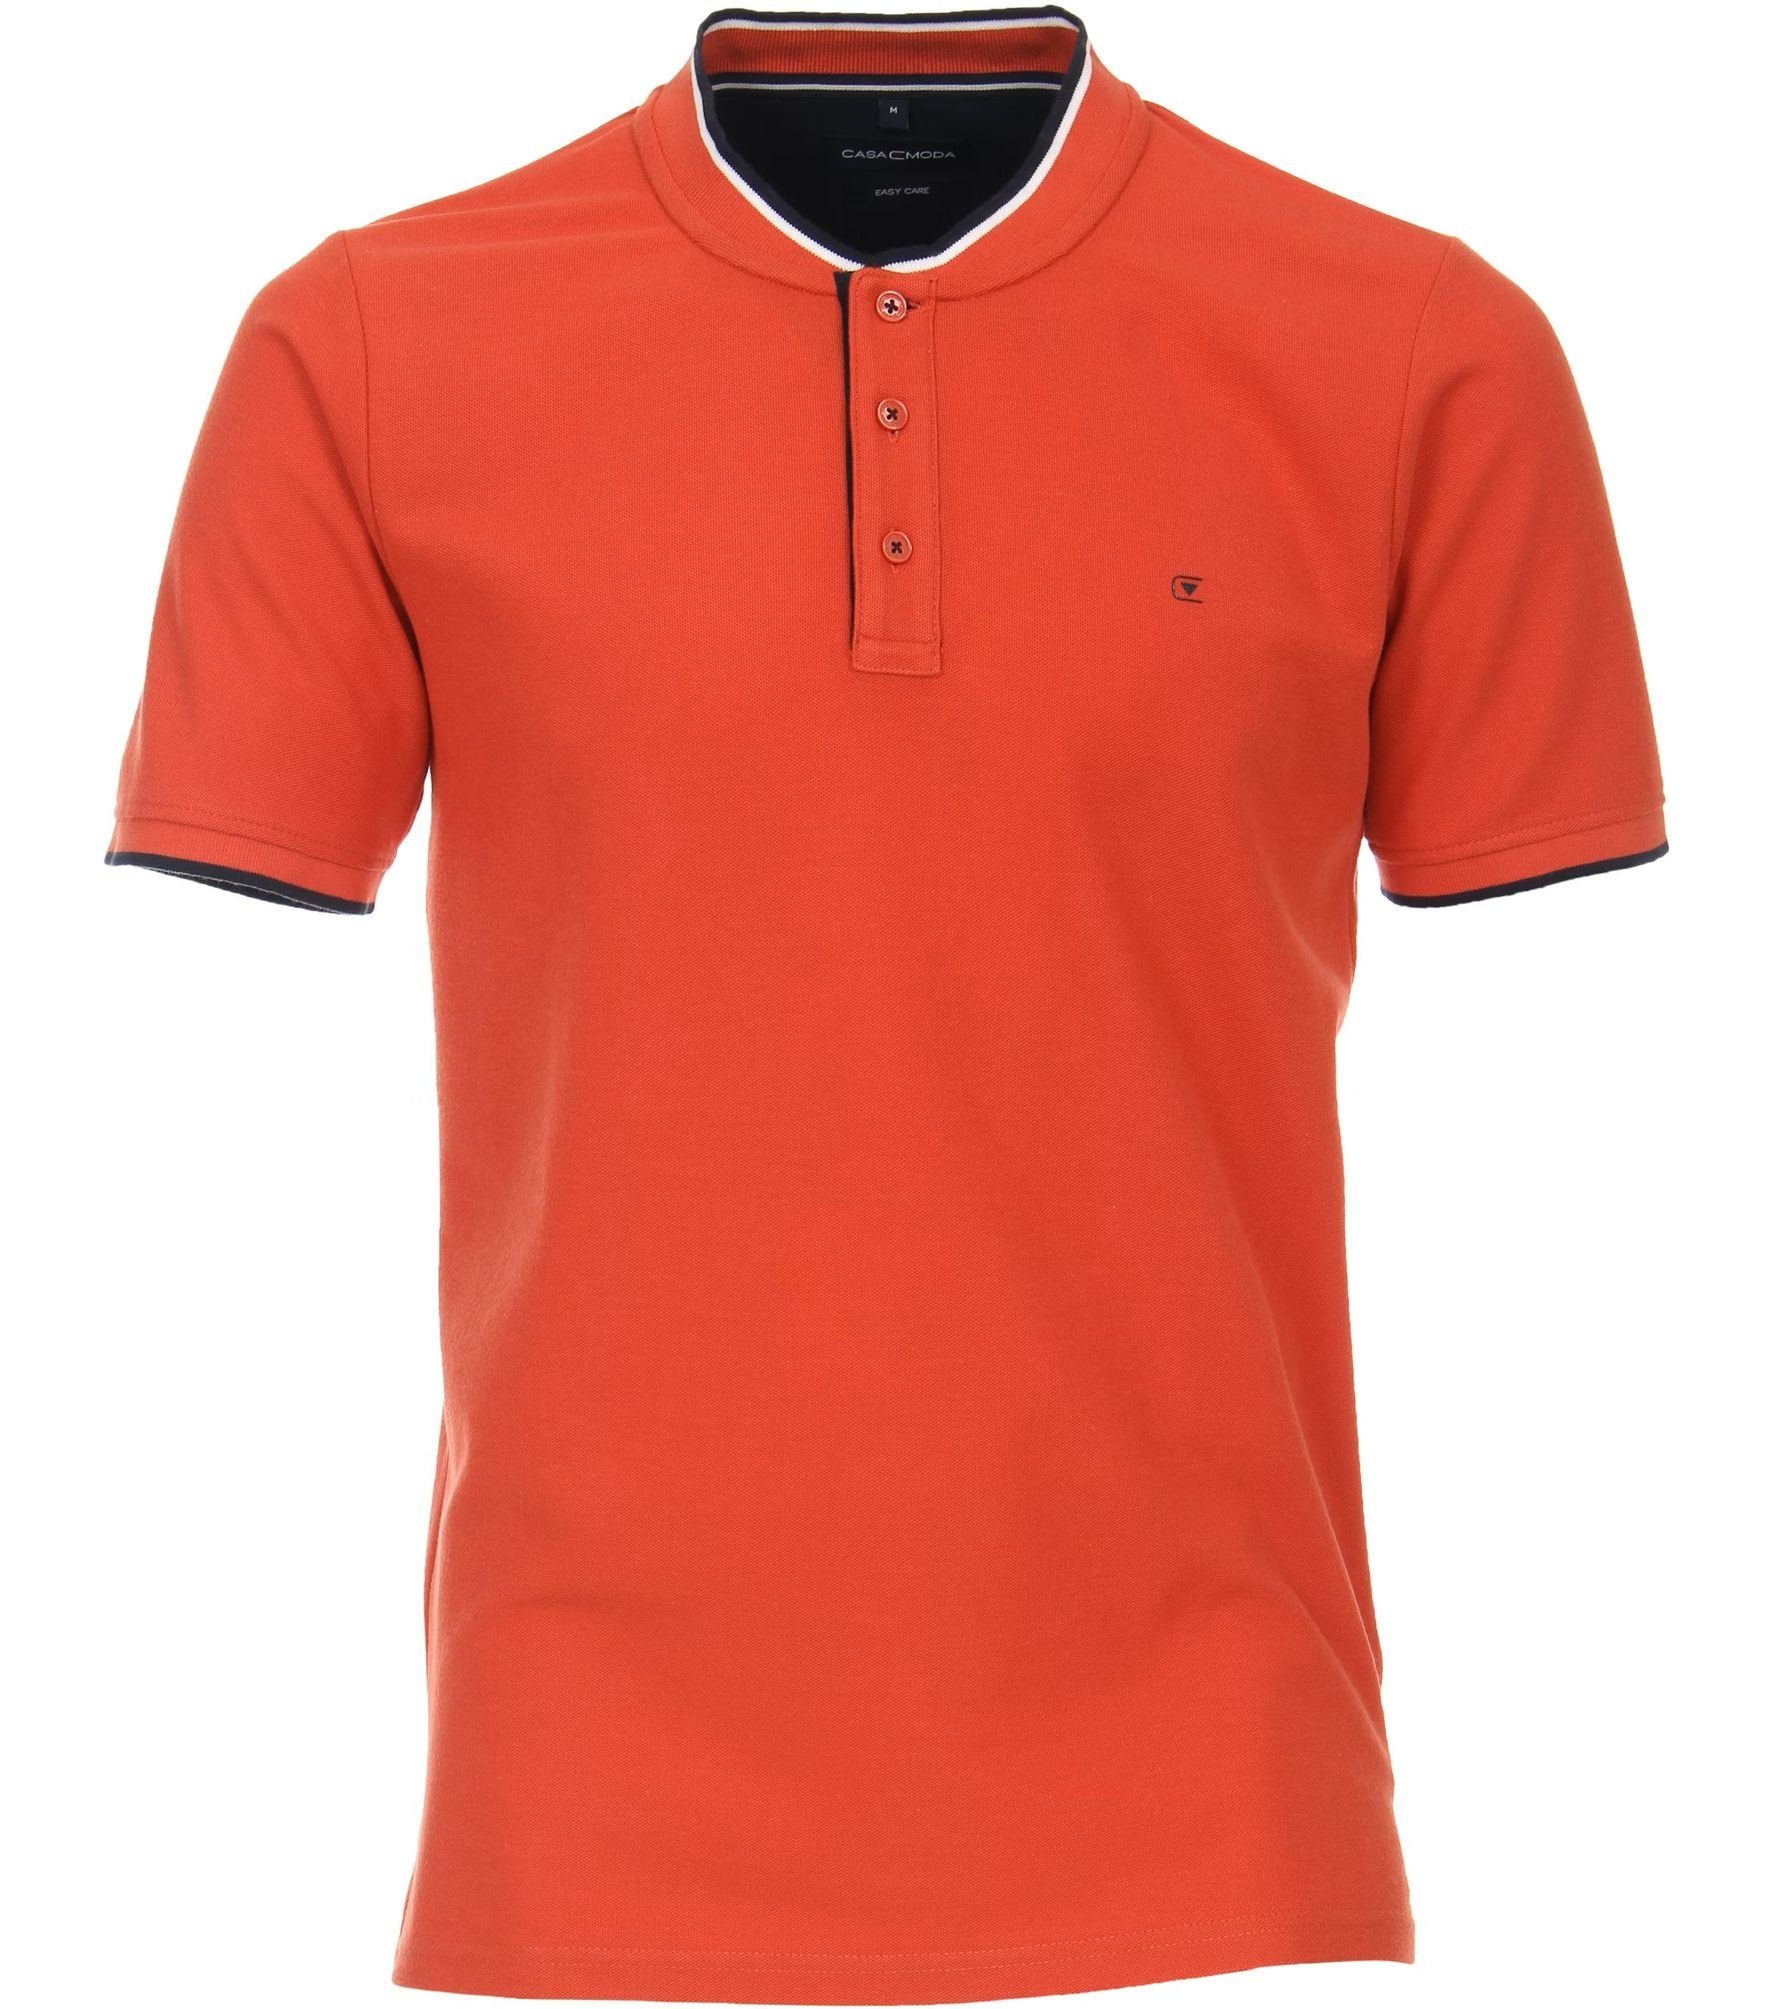 (466) CASAMODA orange 923877500 Poloshirt